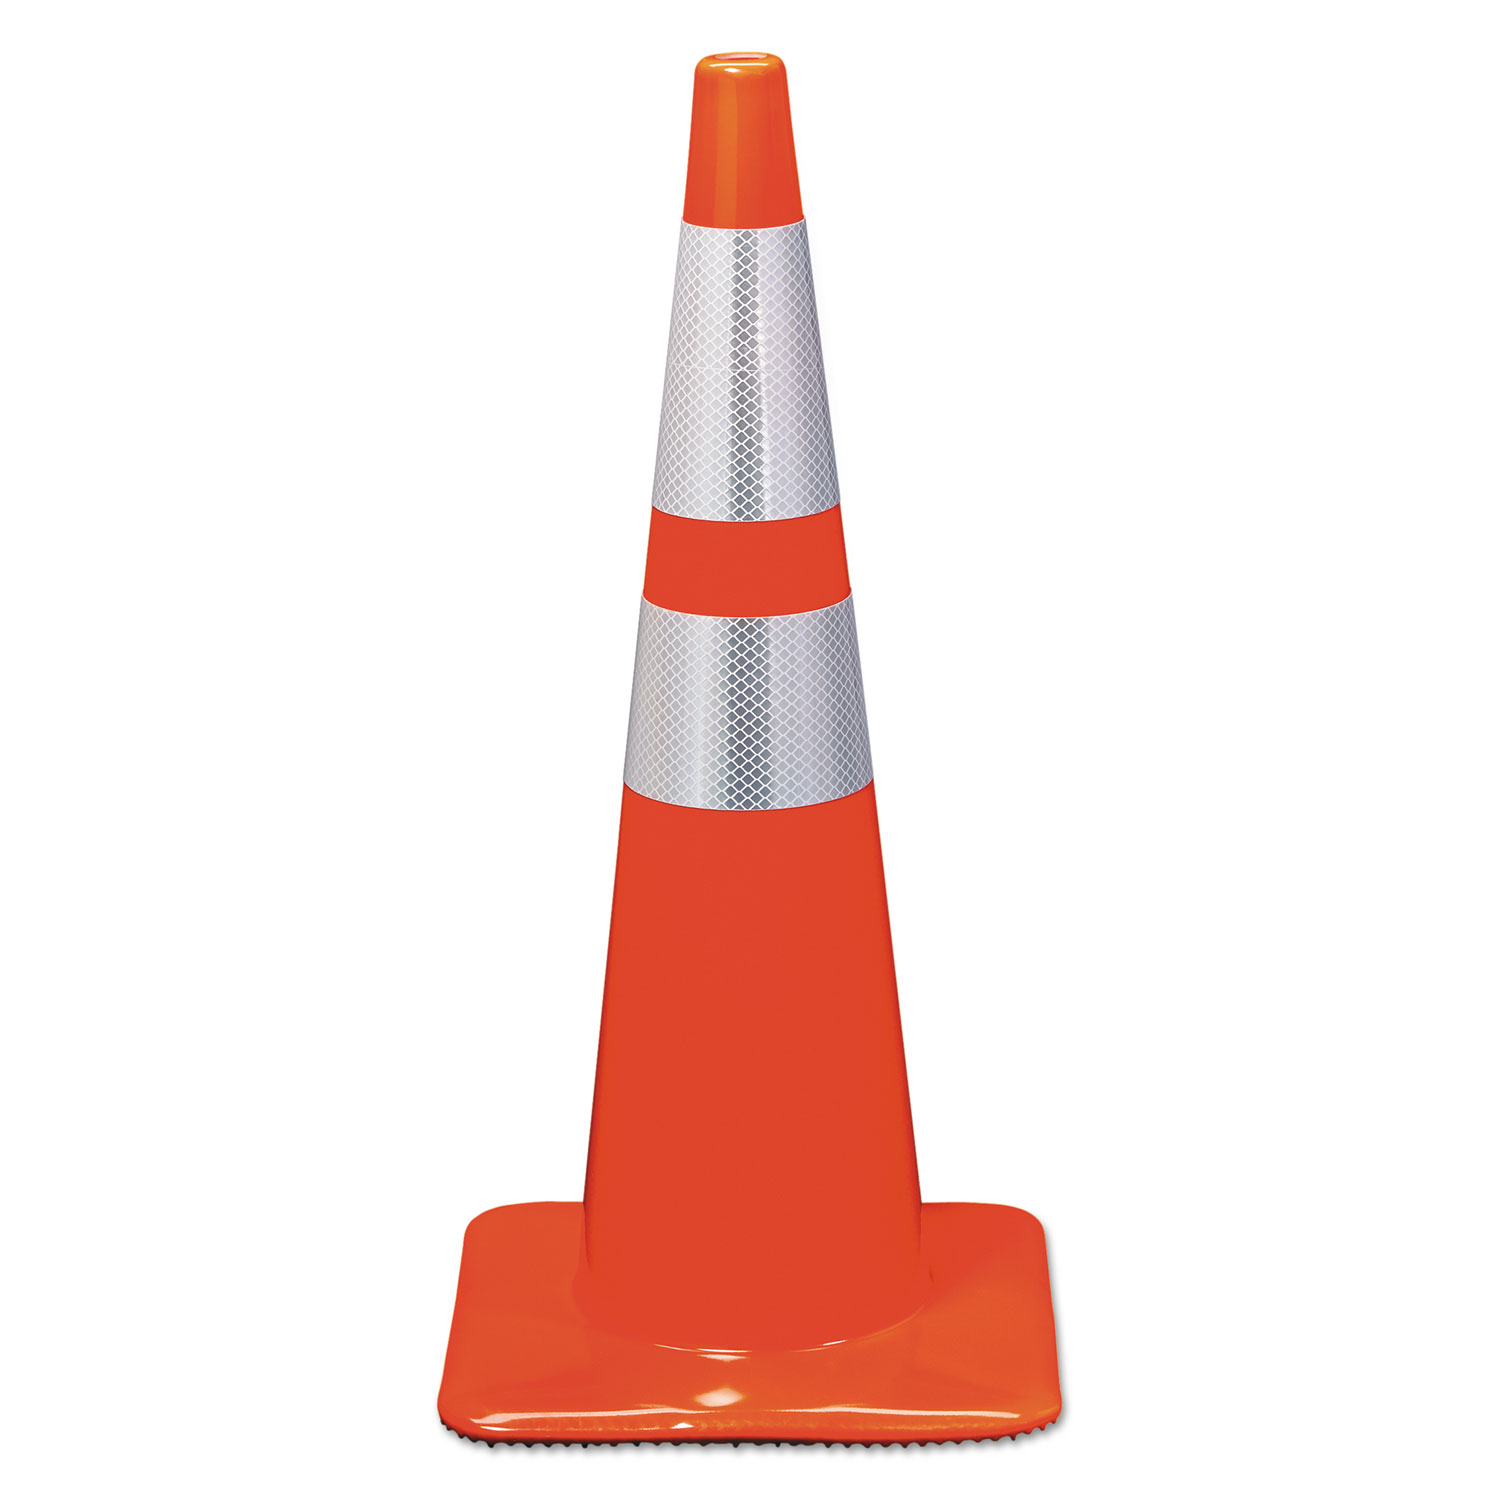  3M 90129-R Reflective Safety Cone, 12 3/4 x 12 3/4 x 28, Orange (MMM90129R) 